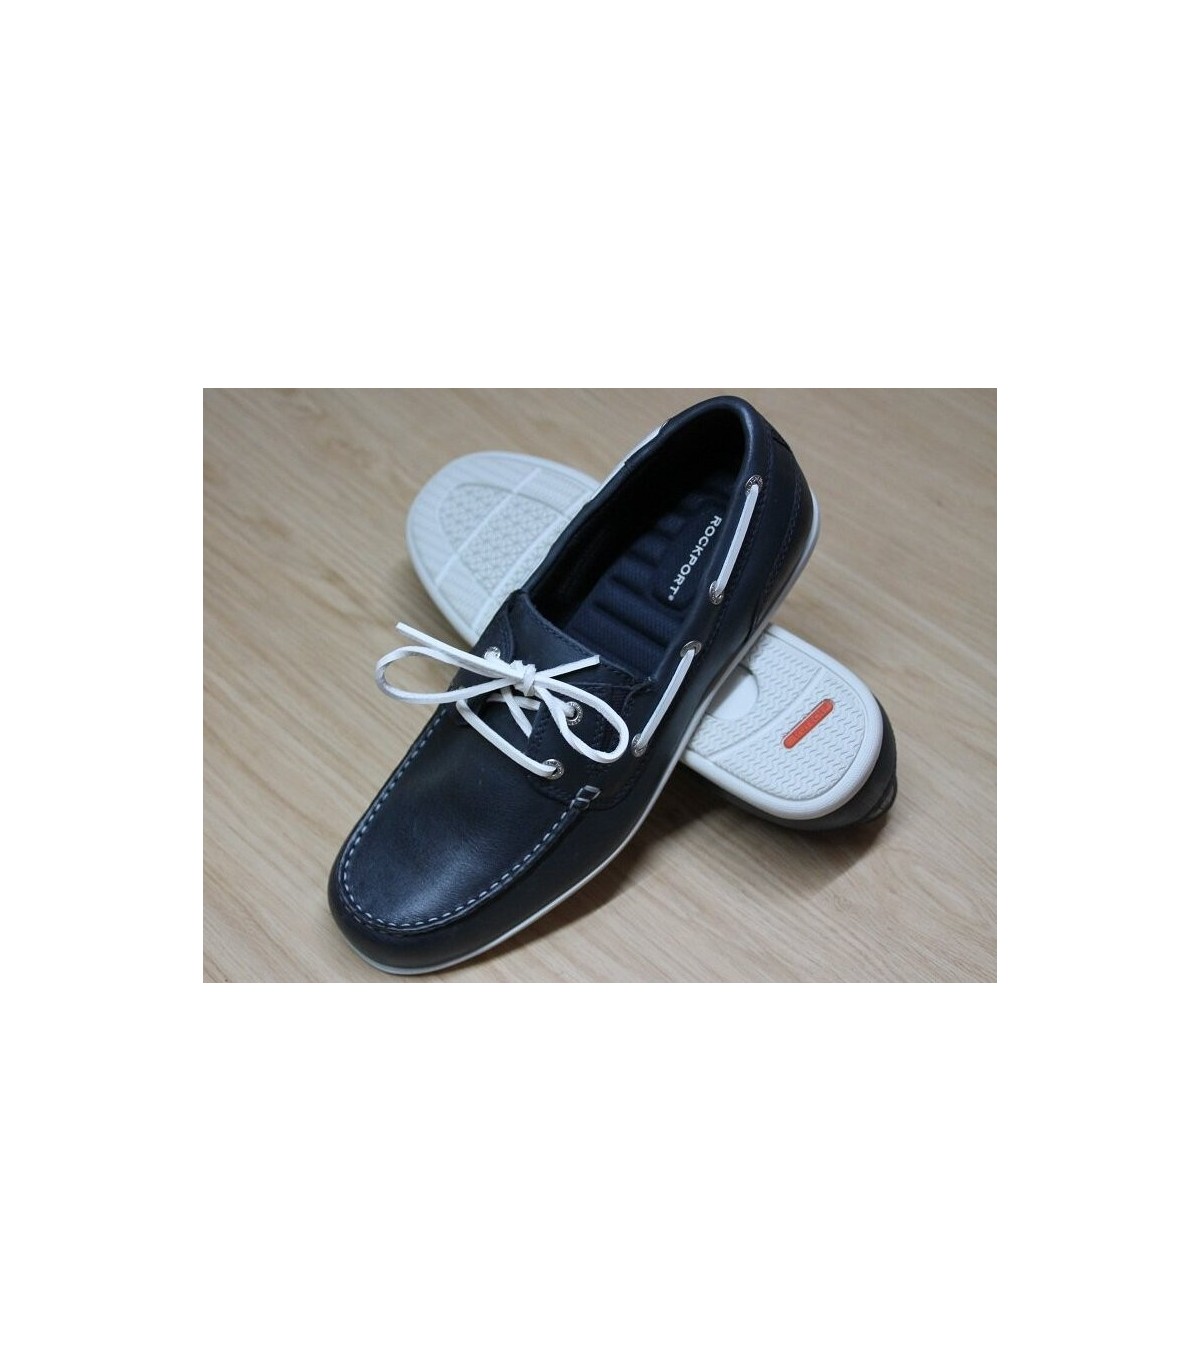 ventaja dentro de poco Incompatible Zapato náutico con cordones, color azul marino